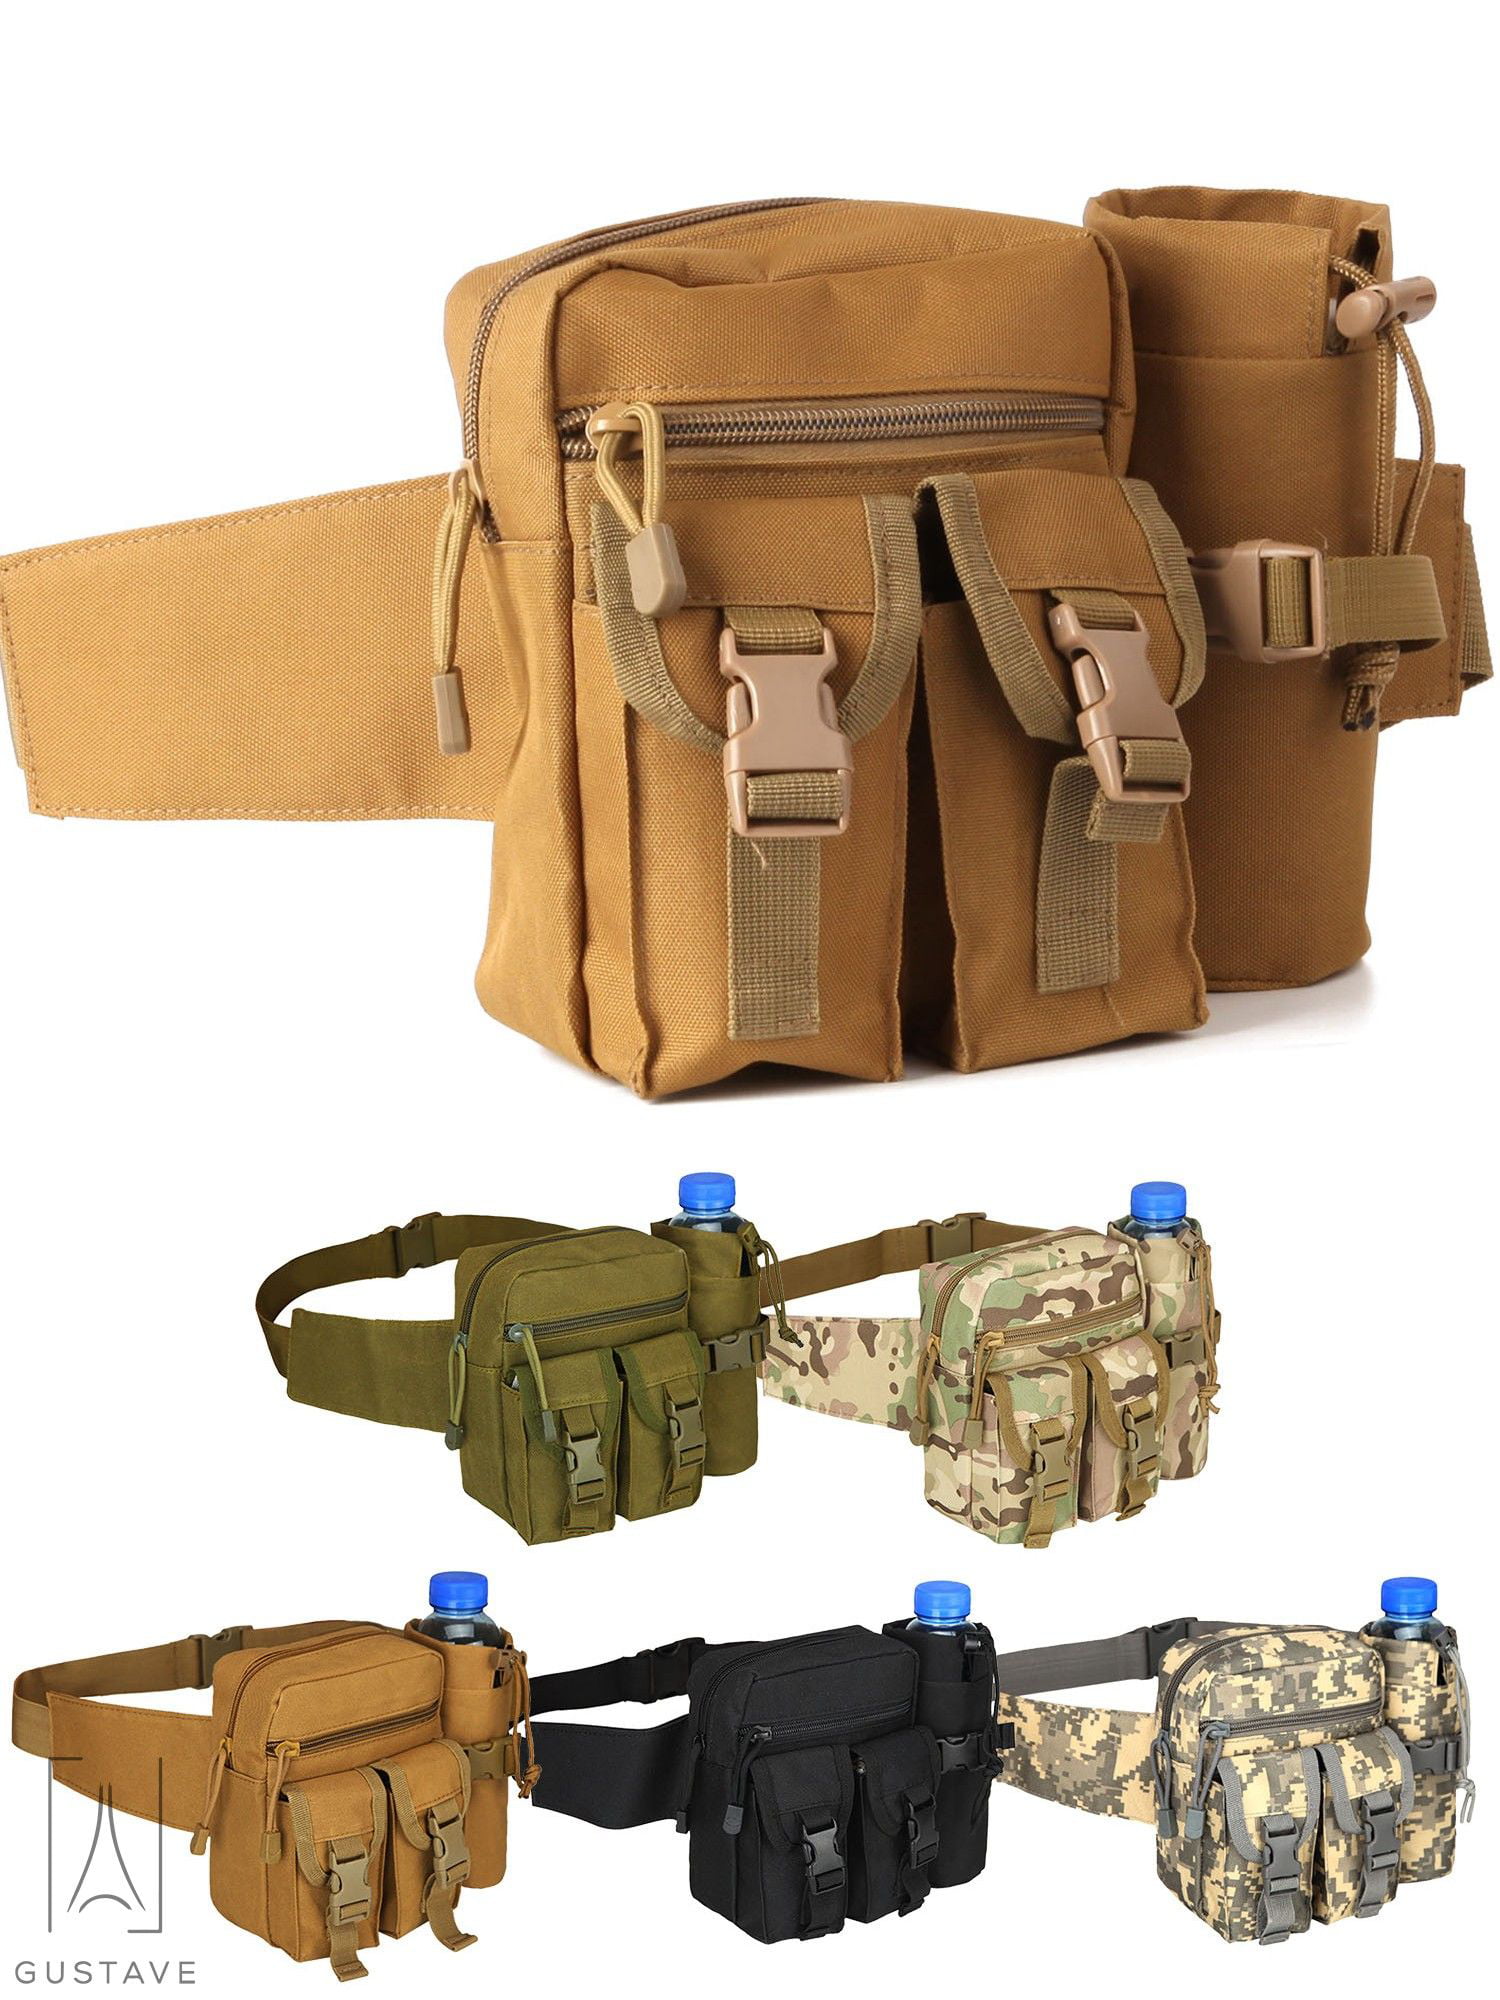 Tactical Pouch Belt Military Hiking Outdoor Phone Pocket Bum Waist Hip Bag W 